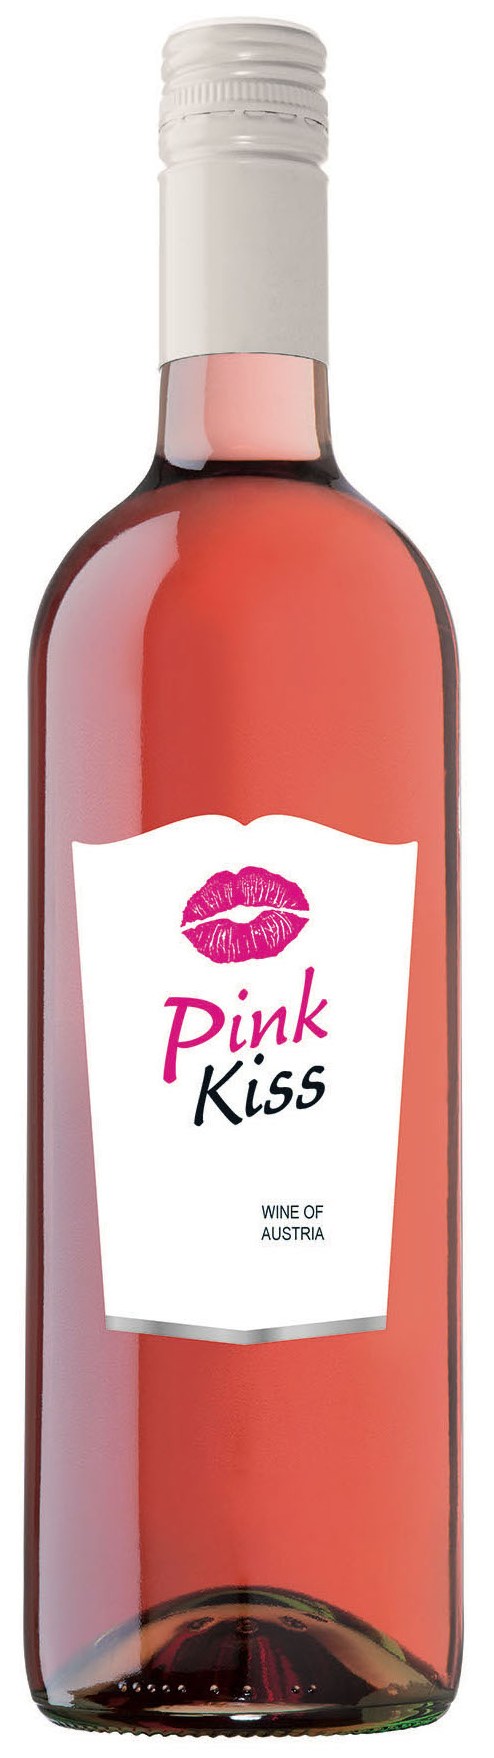 pink-kiss